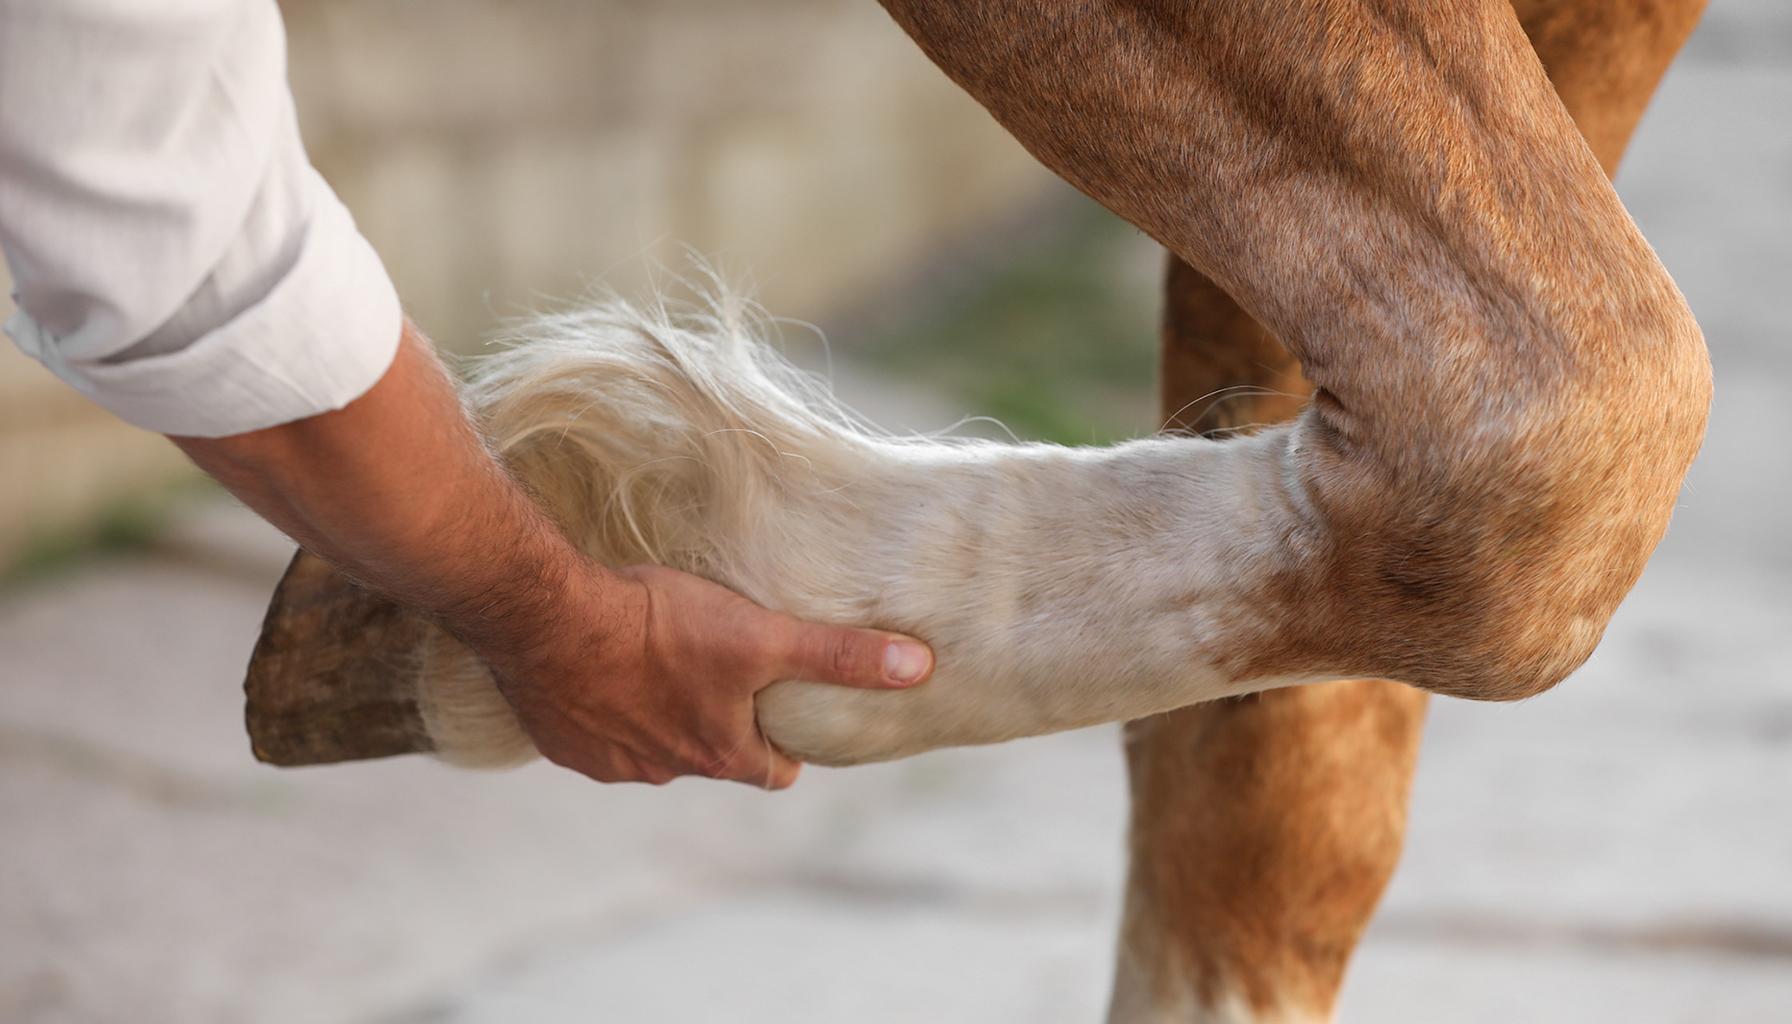 Vet examining horse leg